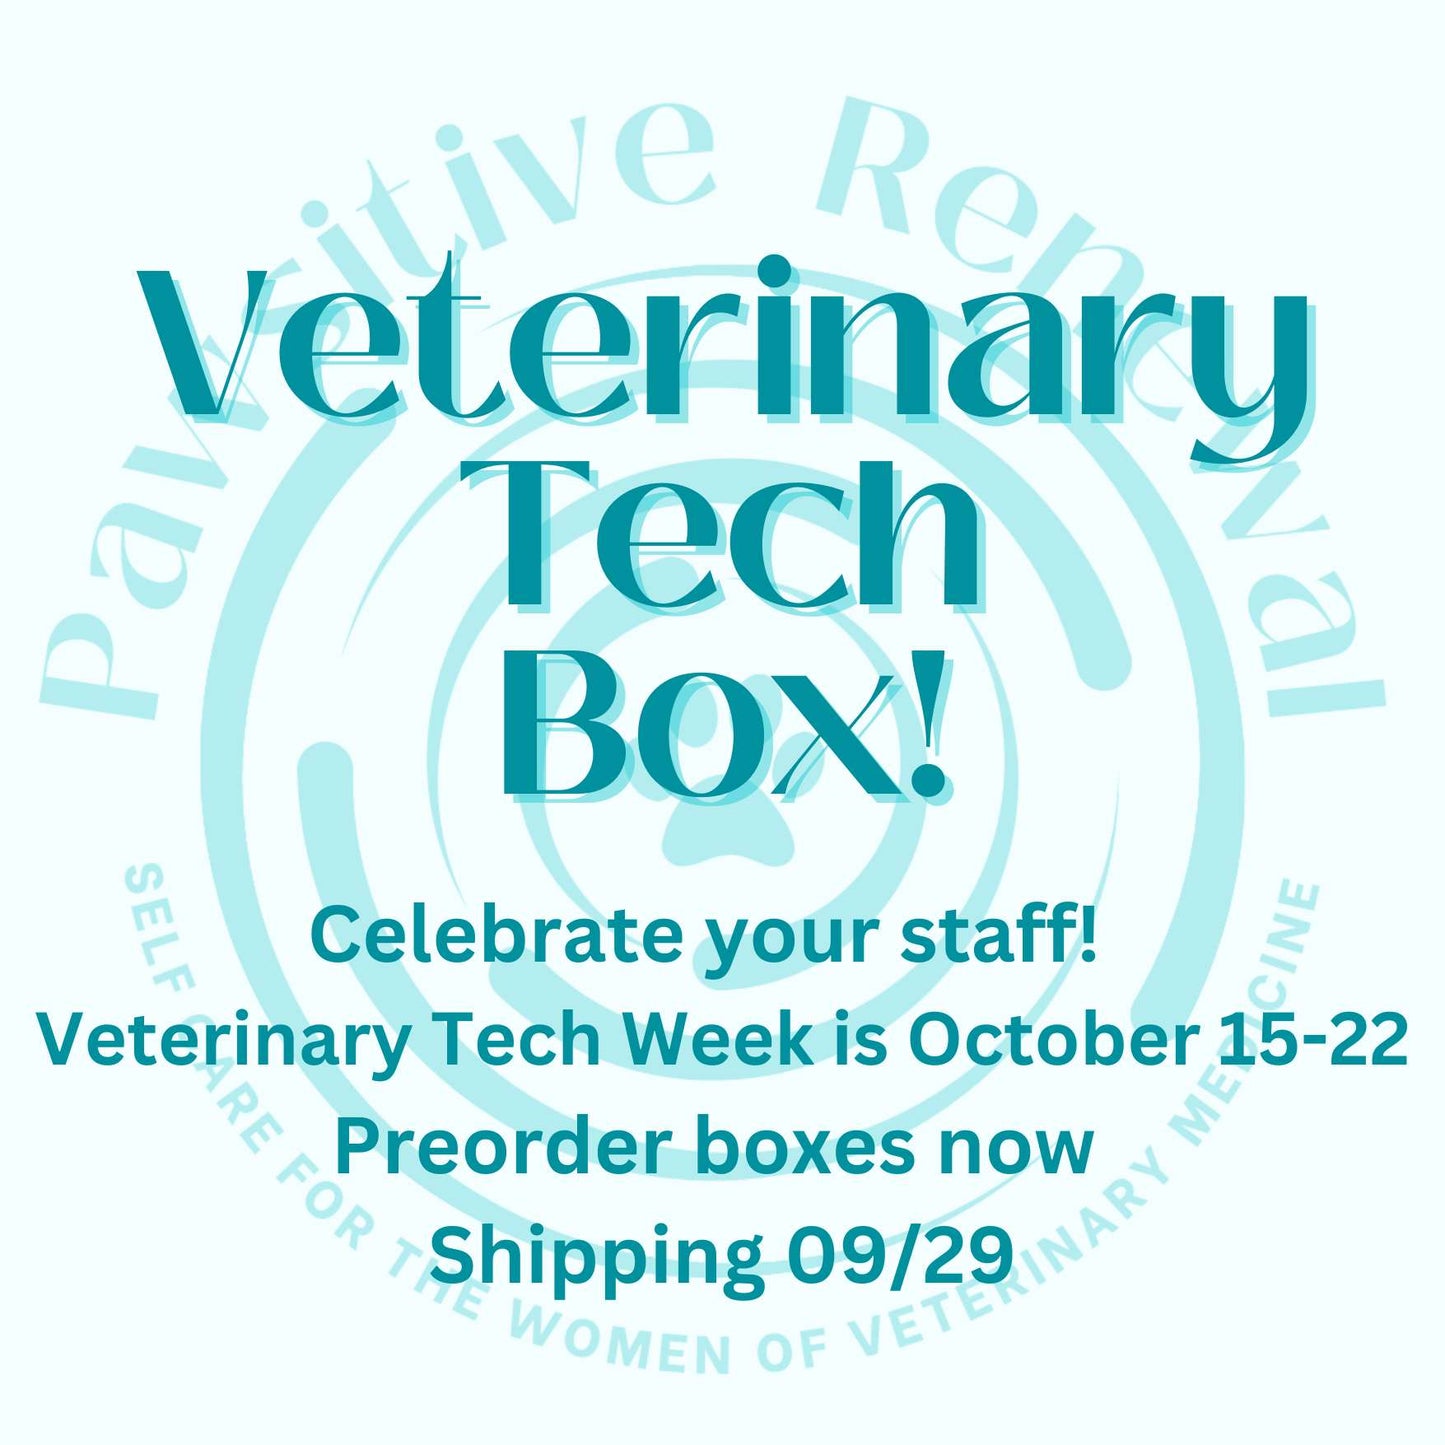 Veterinary Tech Pawsitive Renewal Box - T shirt size SMALL